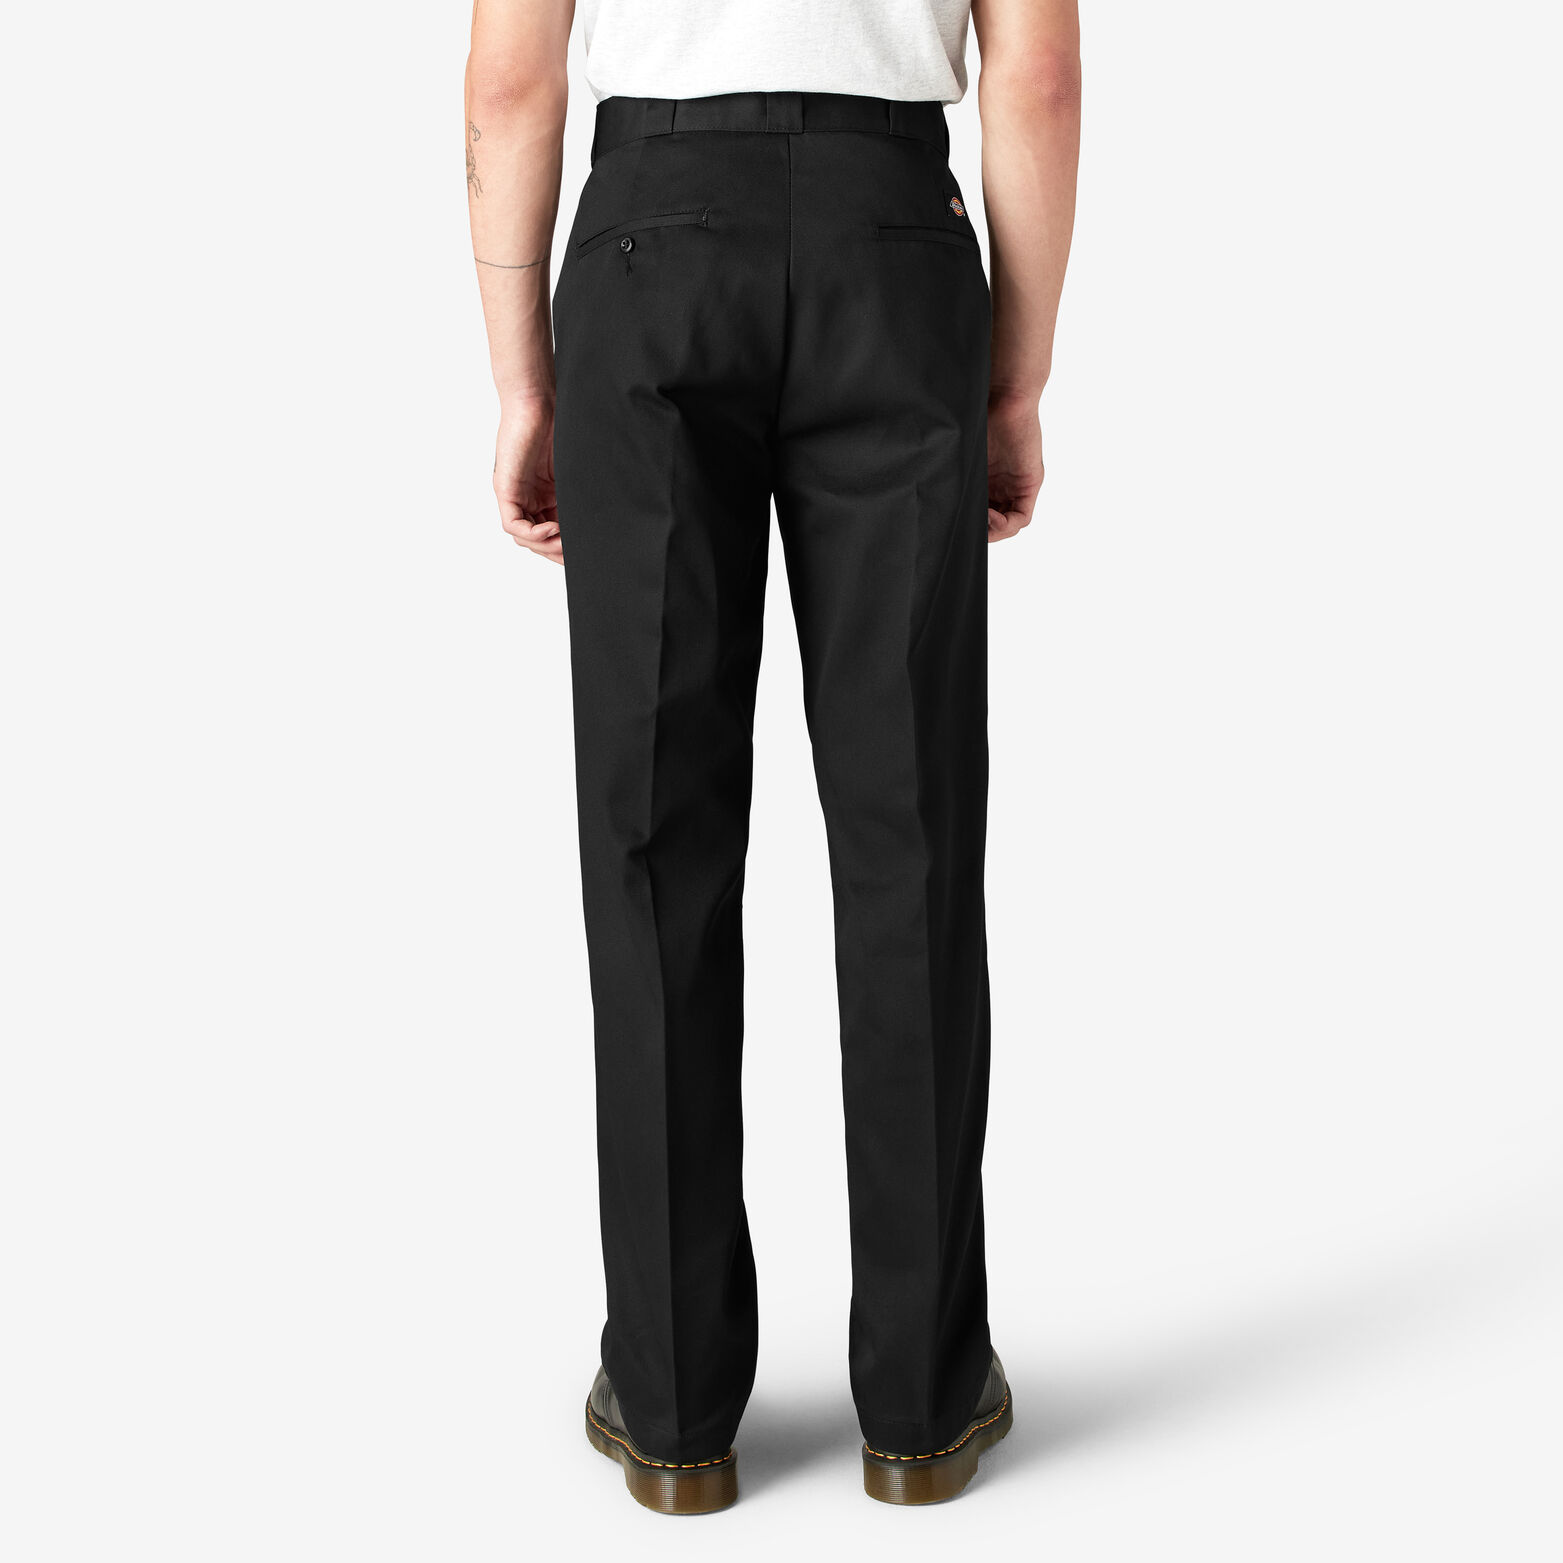 Total Perseus Krage Original 874 Work Pants , Black Size 29 29 | Mens Pants | Dickies